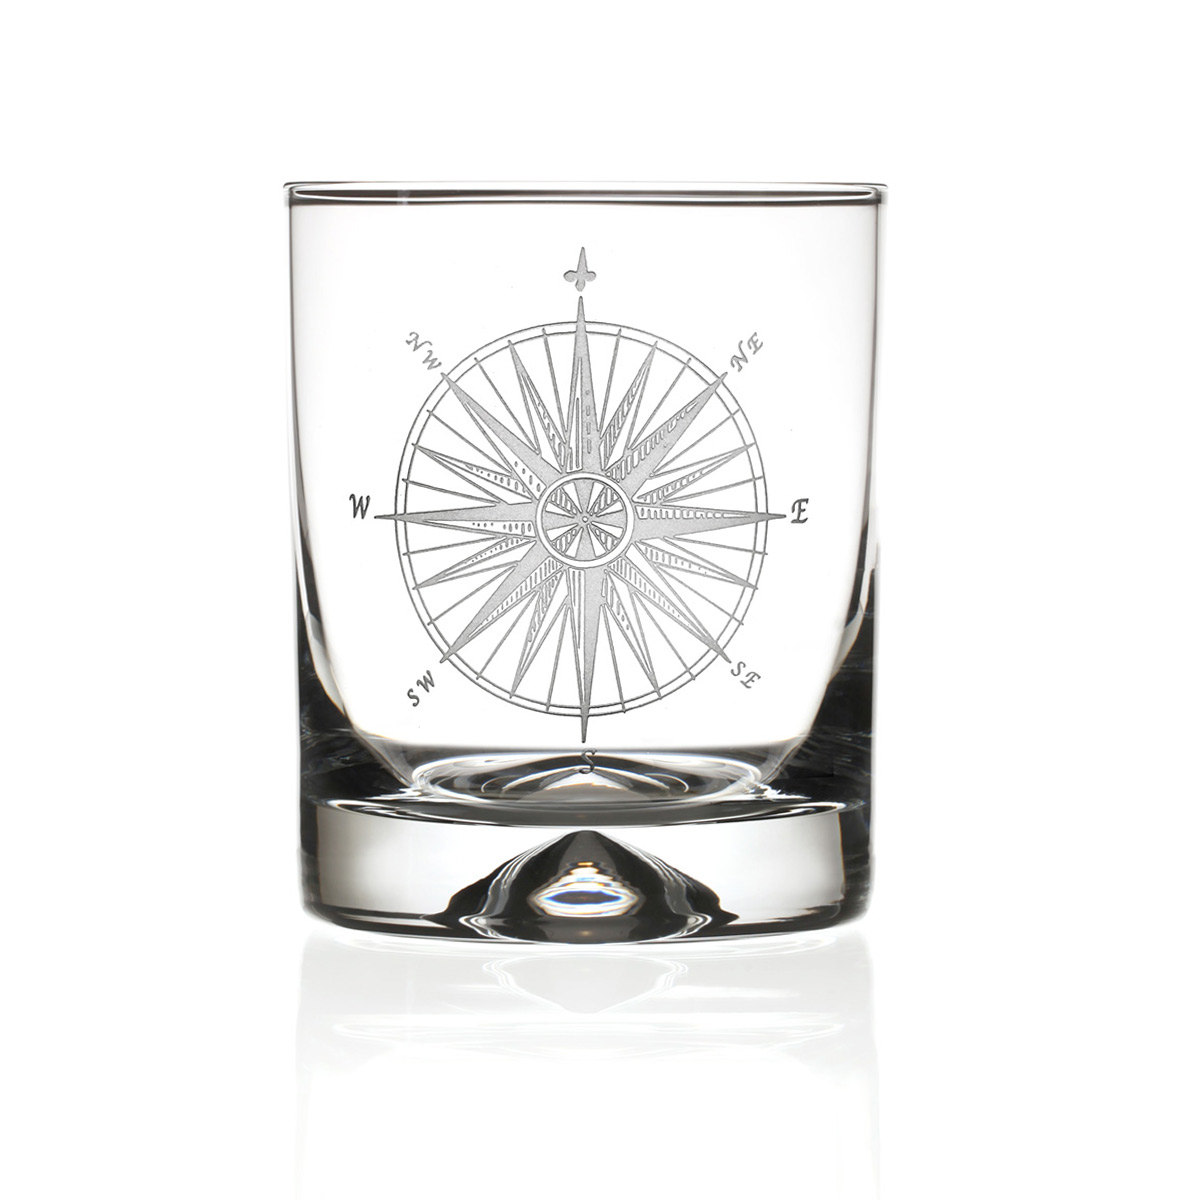 Windrose - Handgefertigter Whisky Tumbler aus Kristallglas mit Gravur